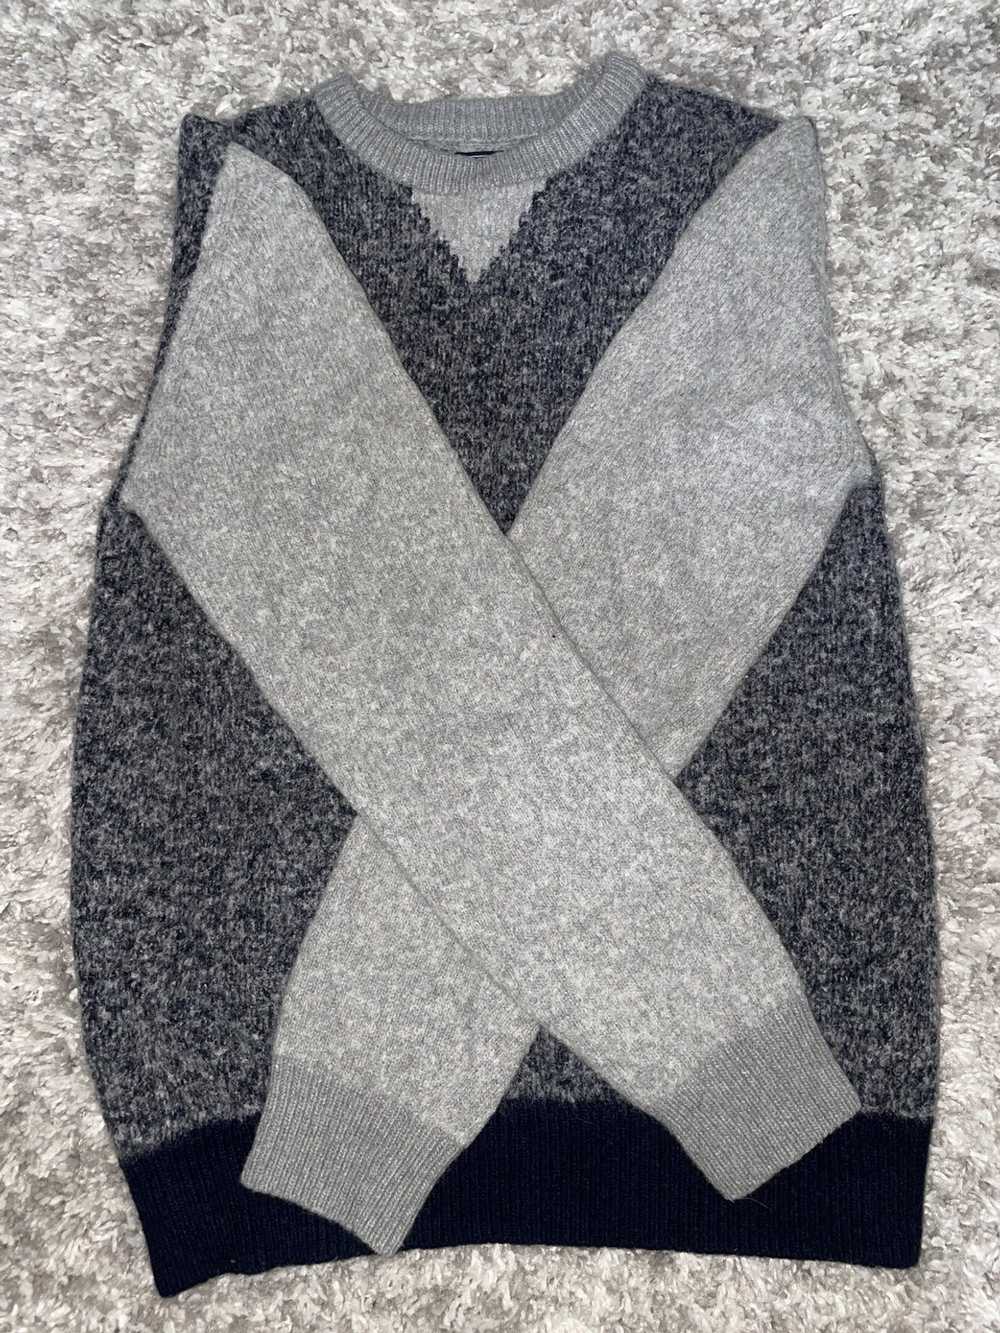 Woolrich Woolen Mills Woolrich Sweater - image 1